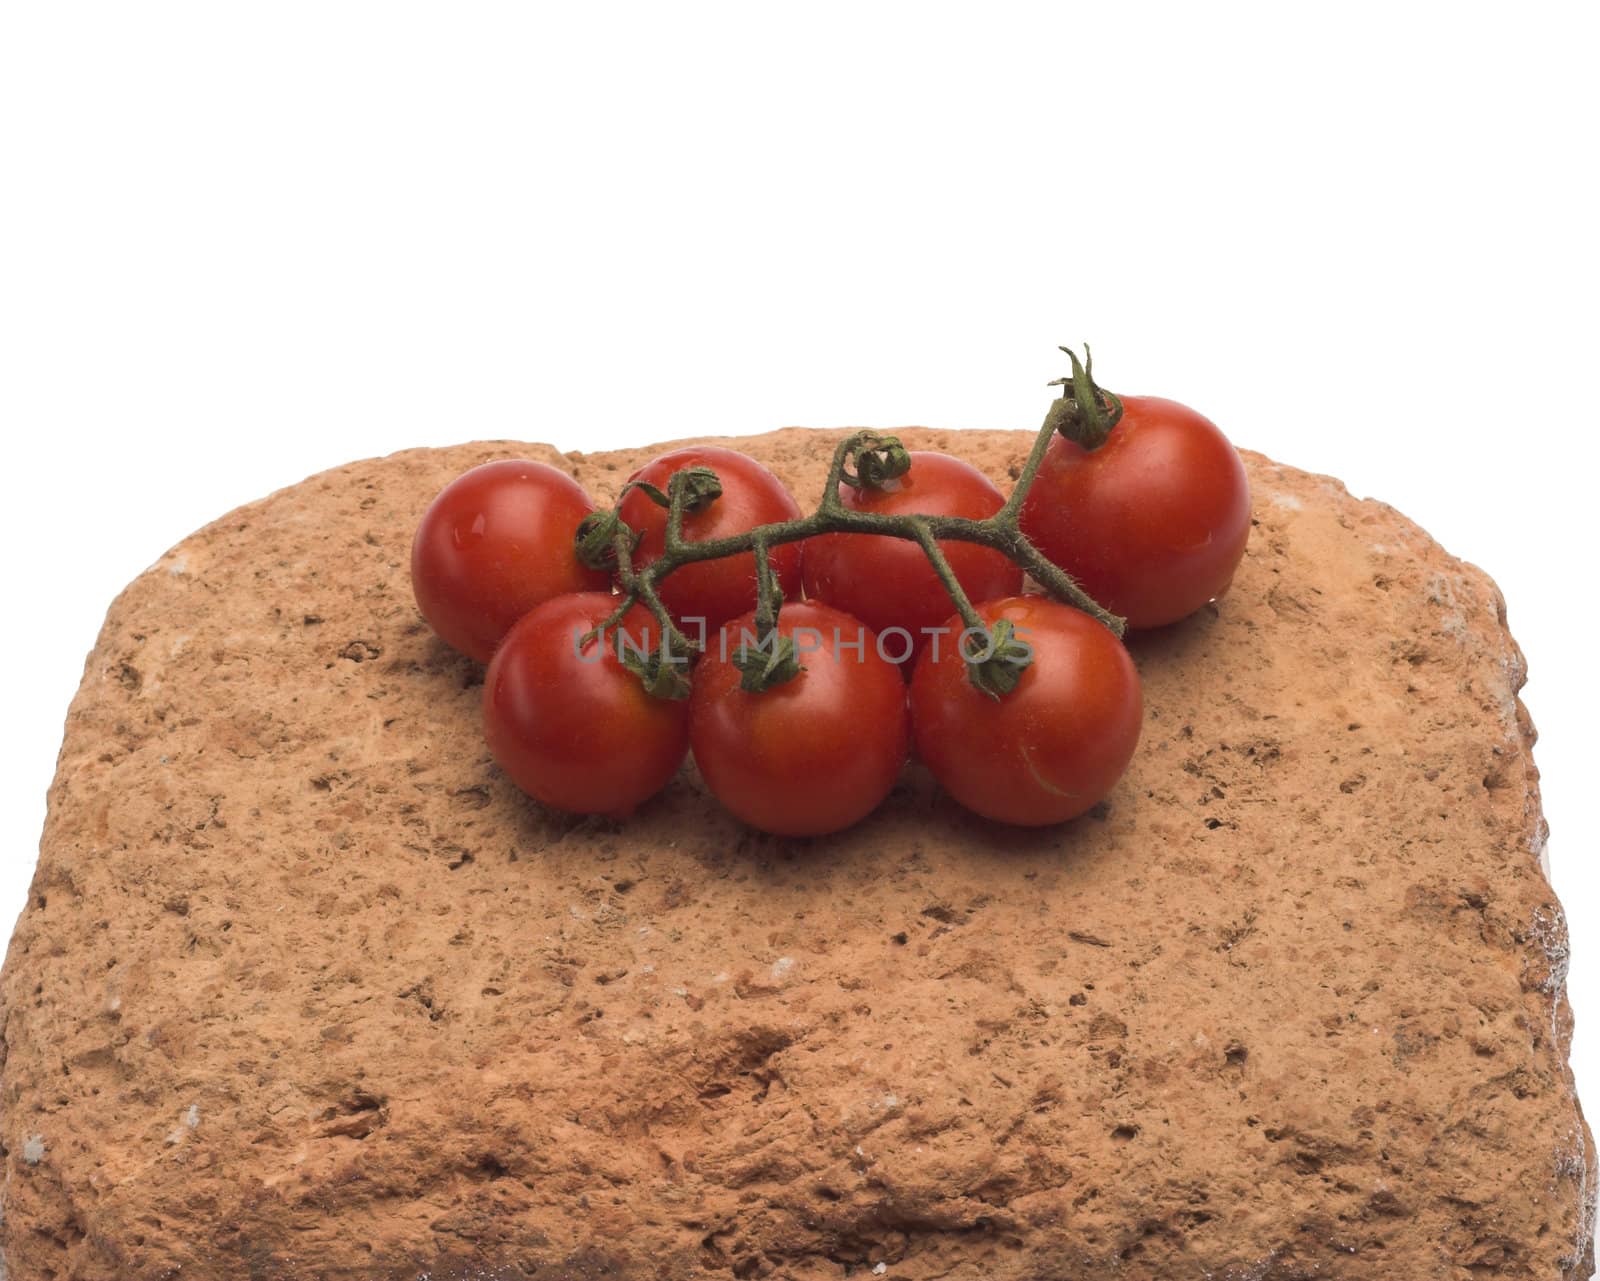 Tomatoes by alexkosev